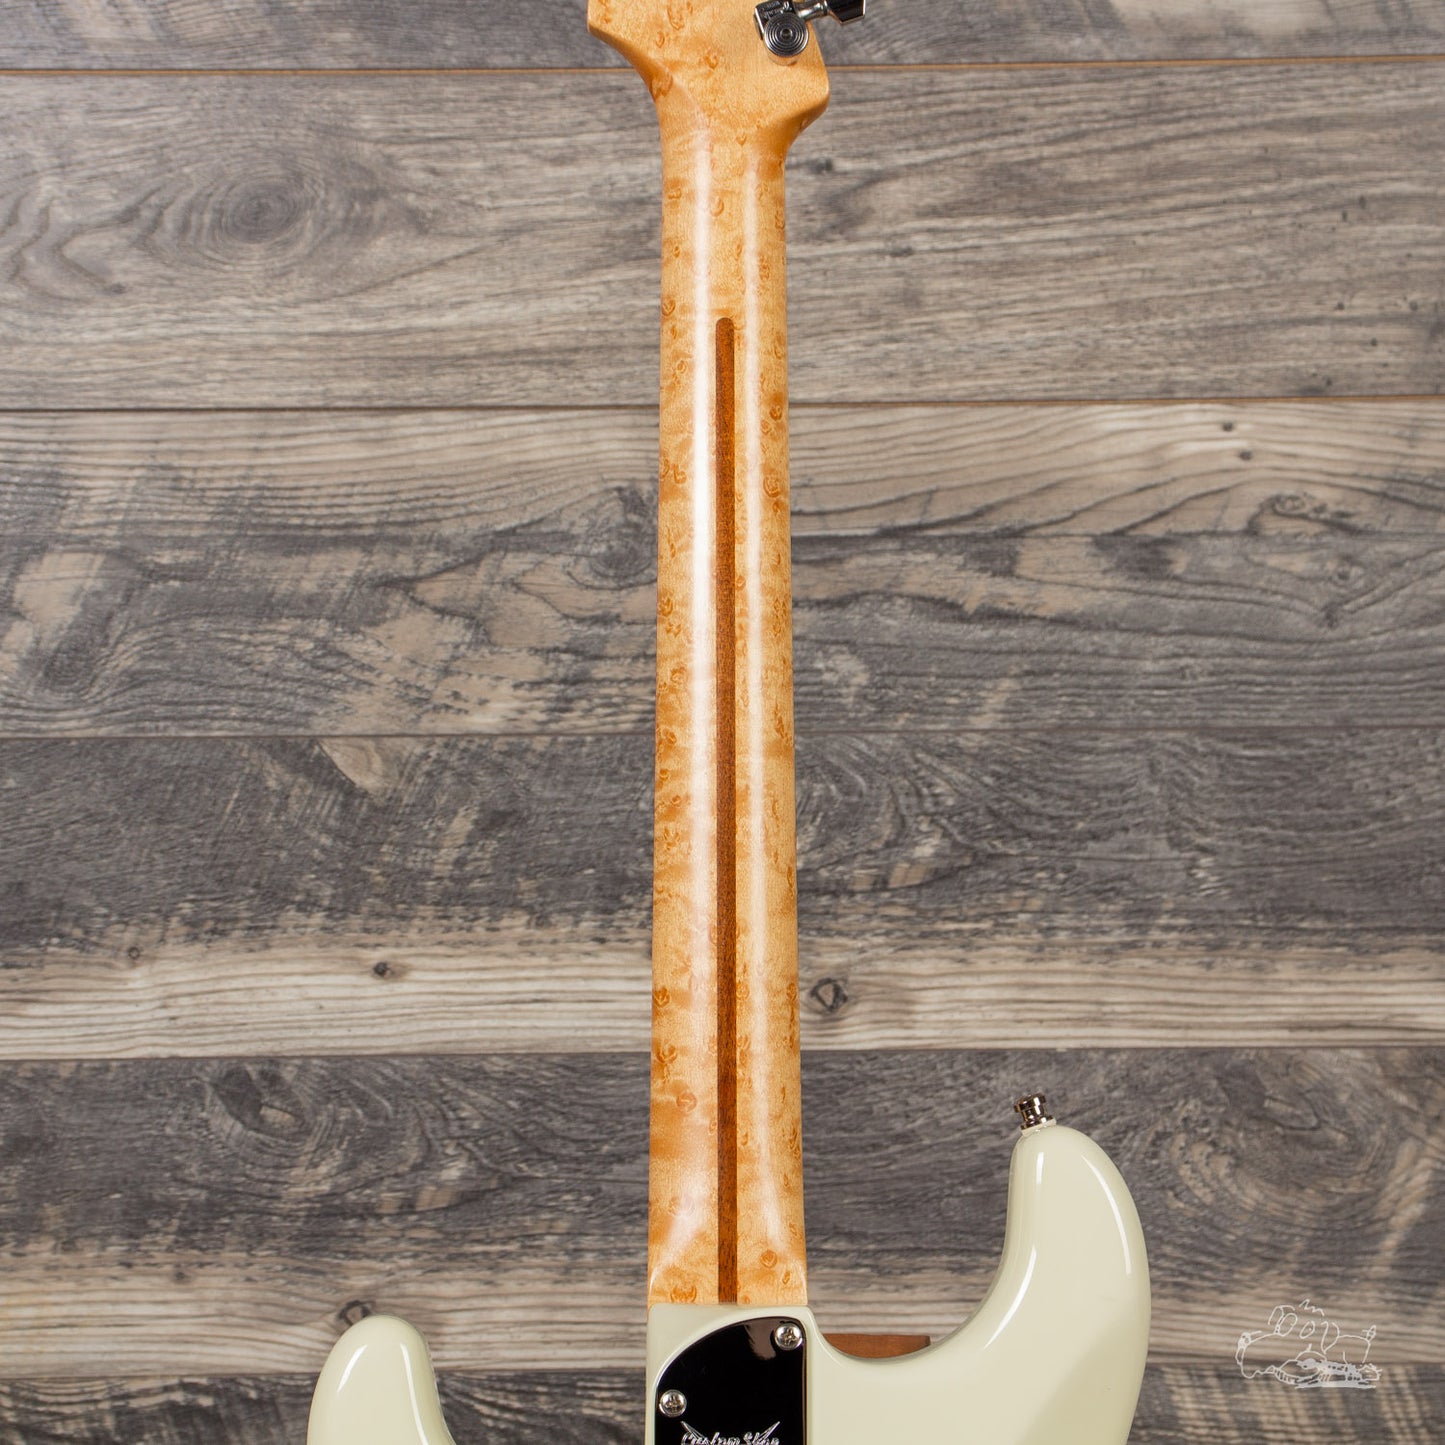 2003 Fender Jeff Beck Stratocaster - Todd Krause Master Built